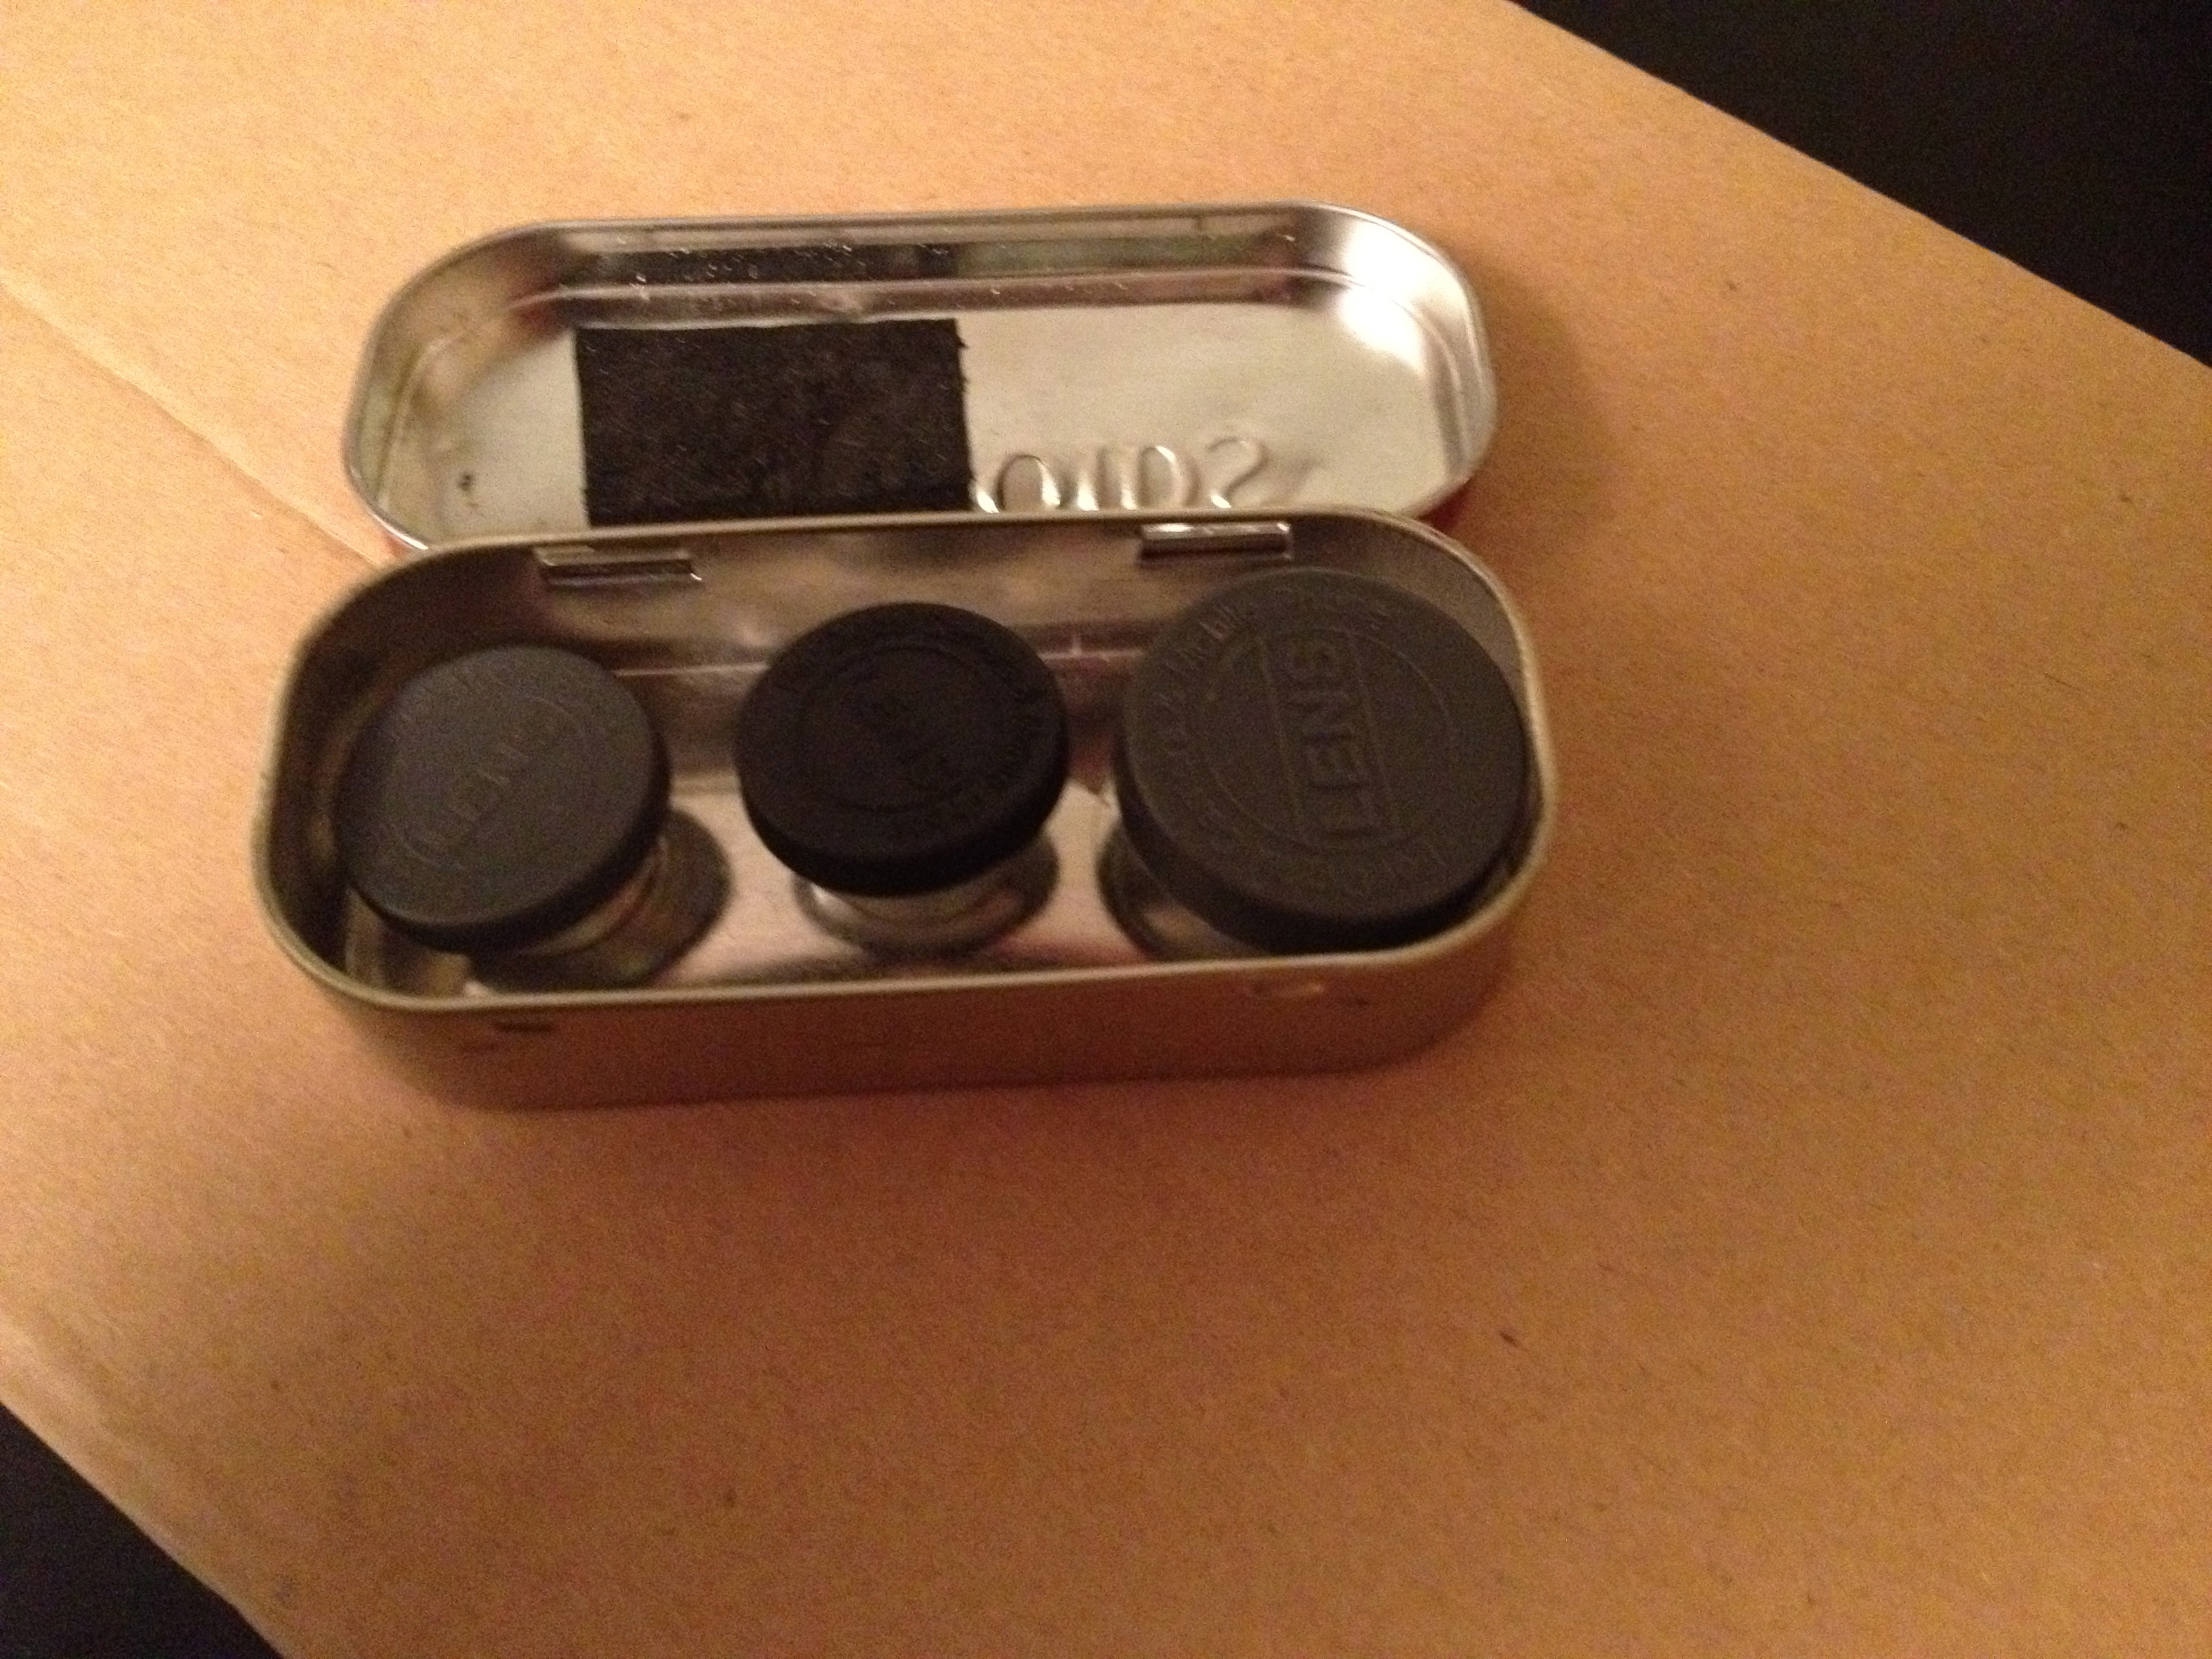 Case for iPhone Lens Kit